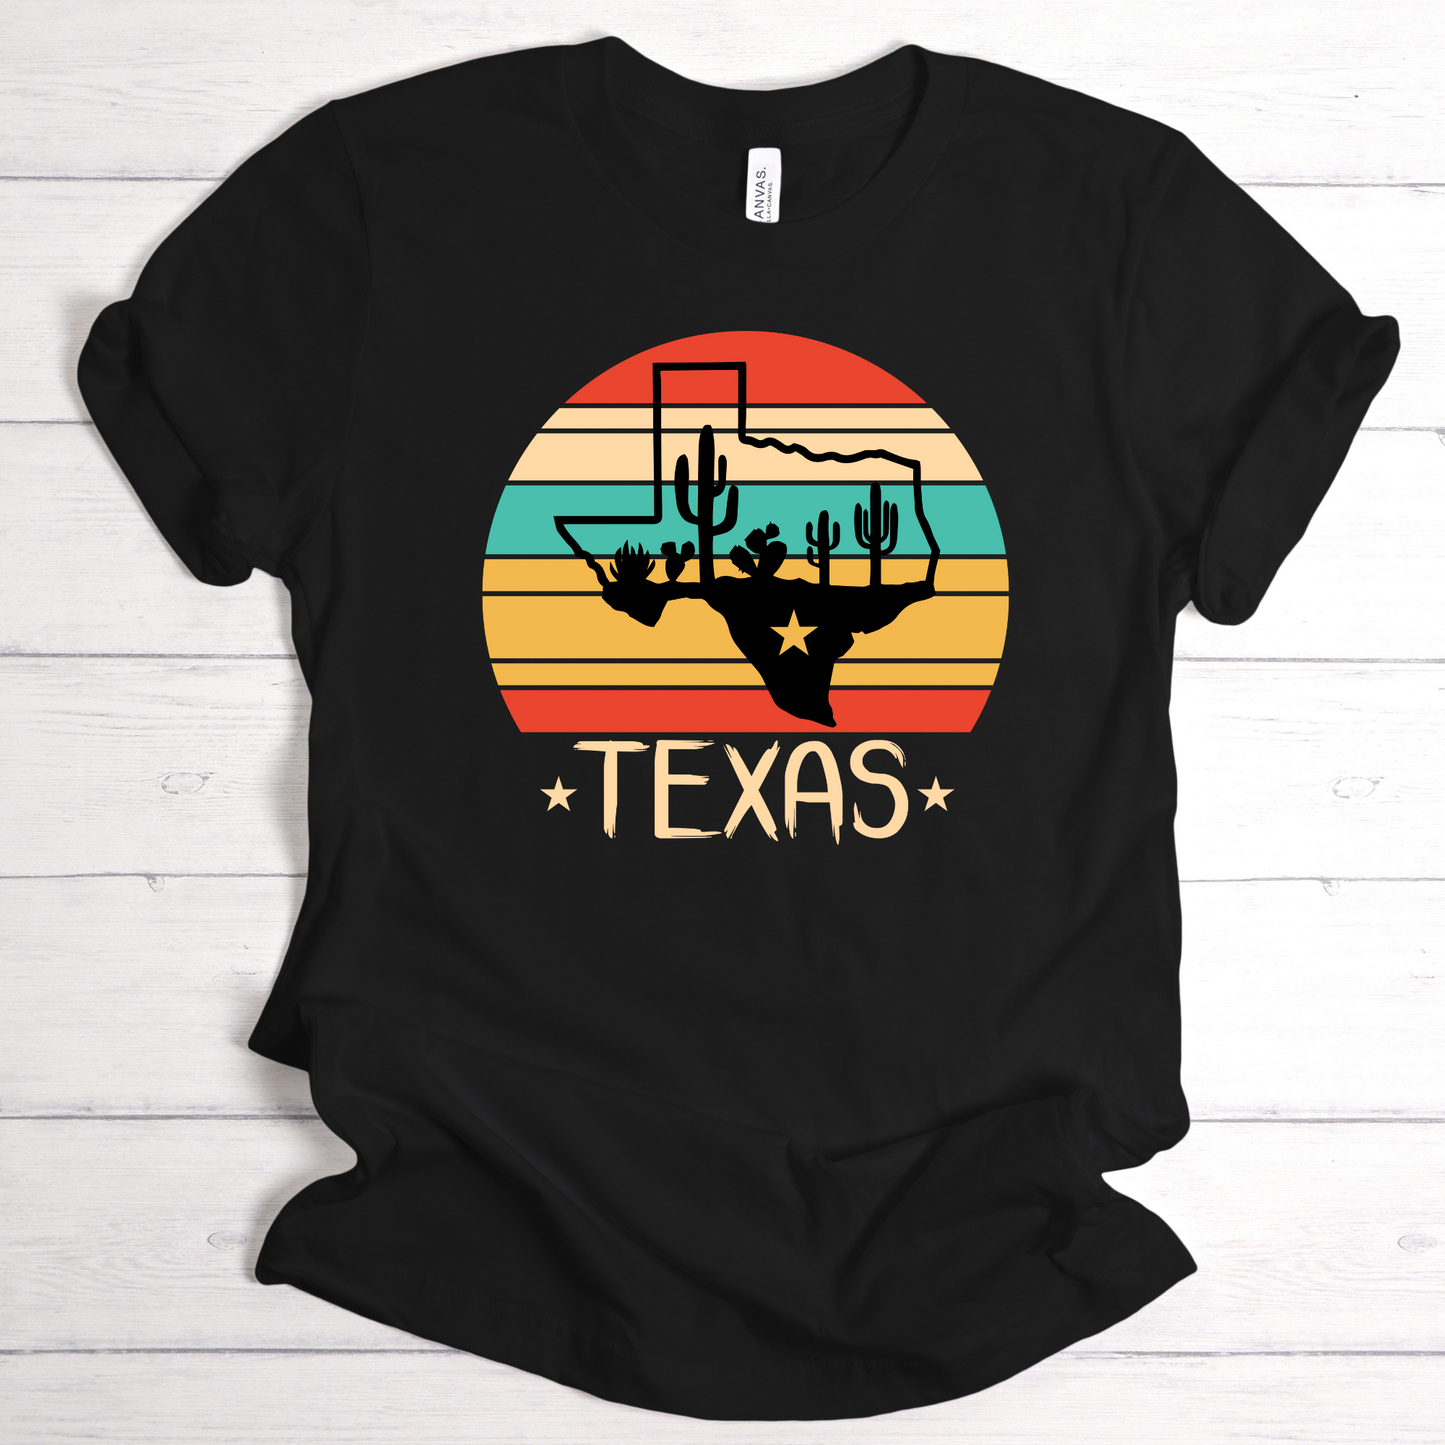 Texas Desert Oasis T-Shirt | Unique Texan Apparel with Cactus and Desert Landscape